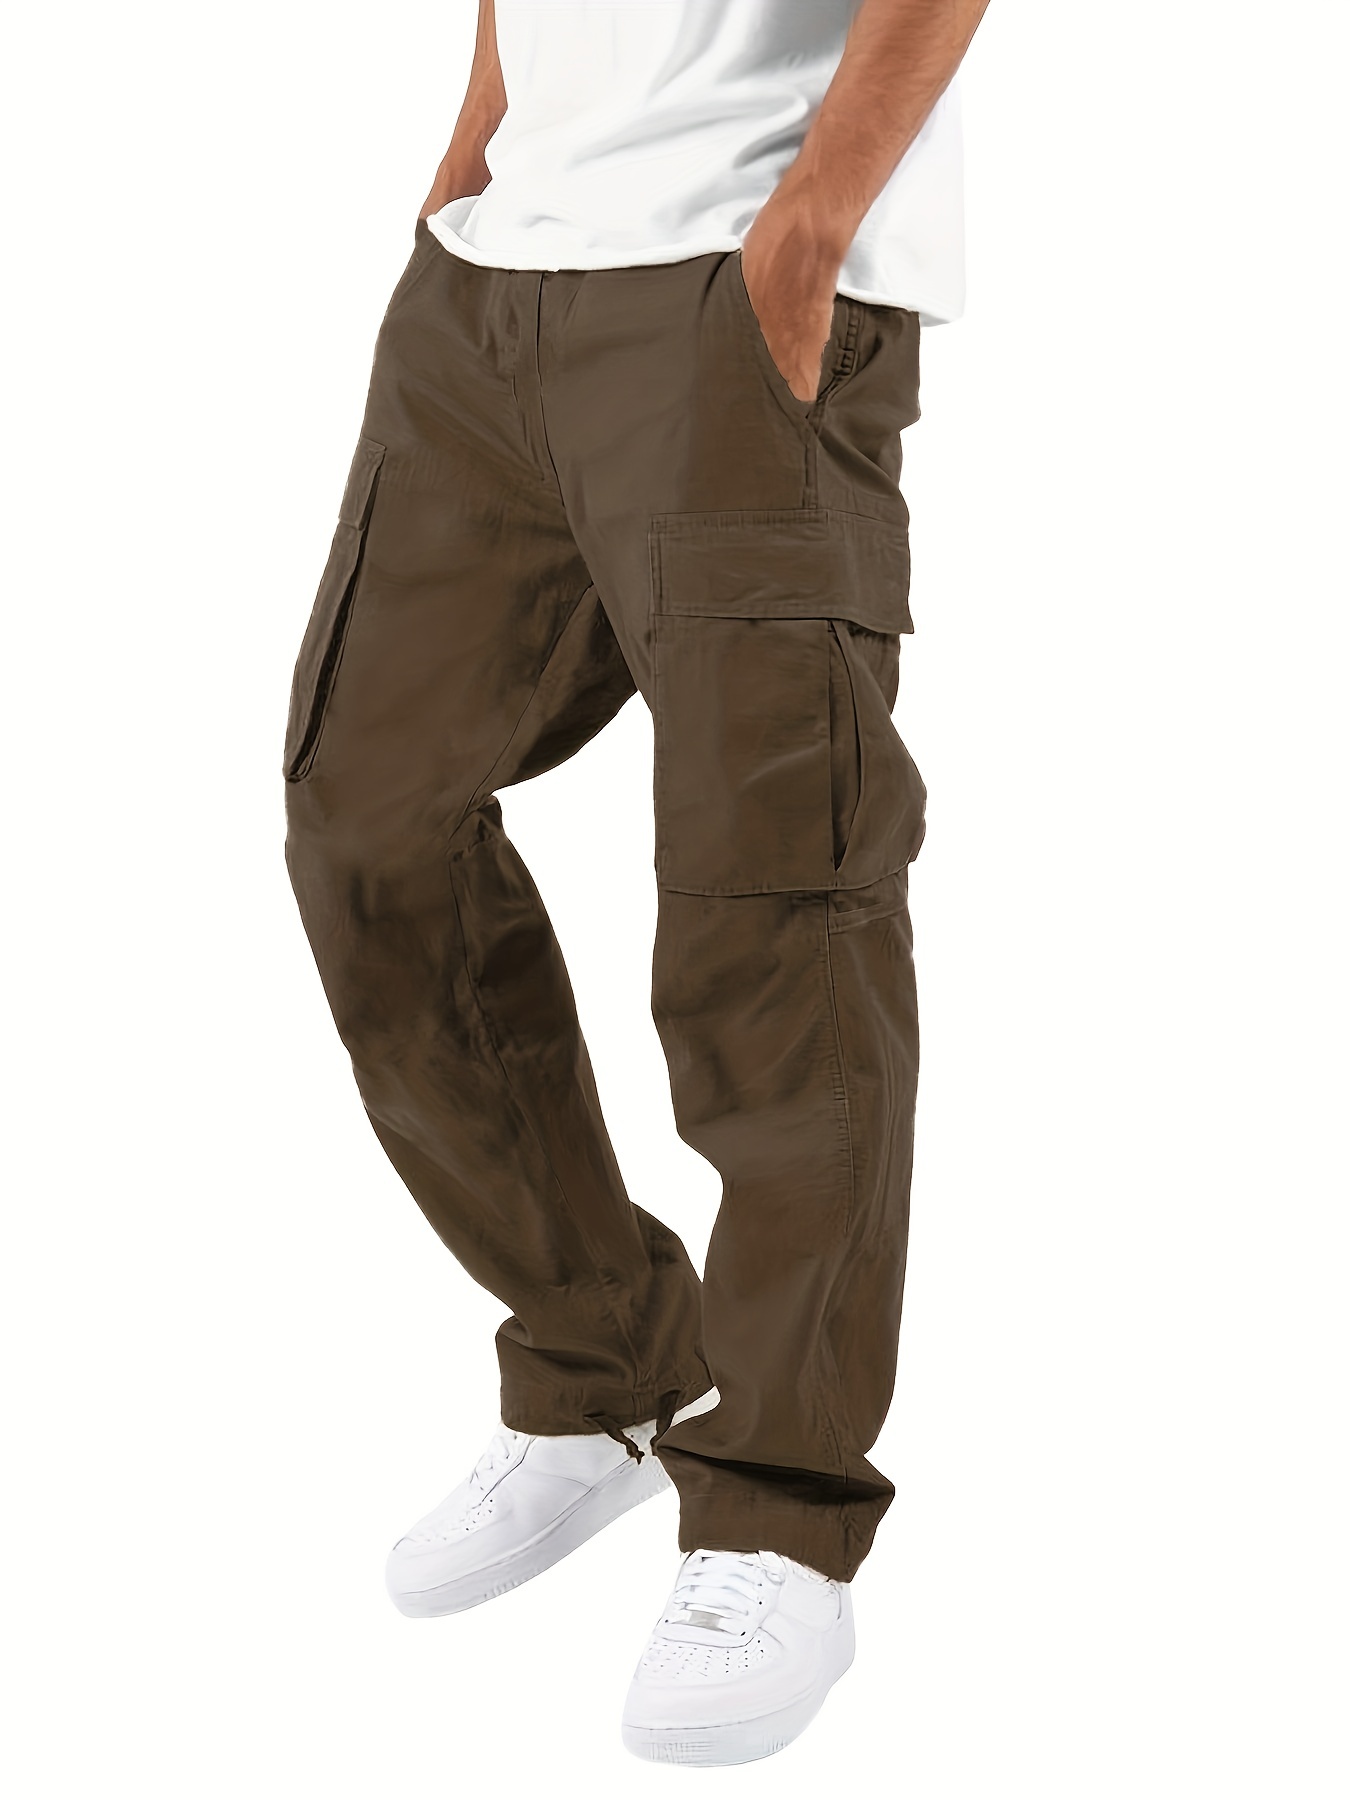 Khaki Cargo Pants For Men Men Fashion Sports Casual Pants Elastic Waist  Straight Leg Loose Pants